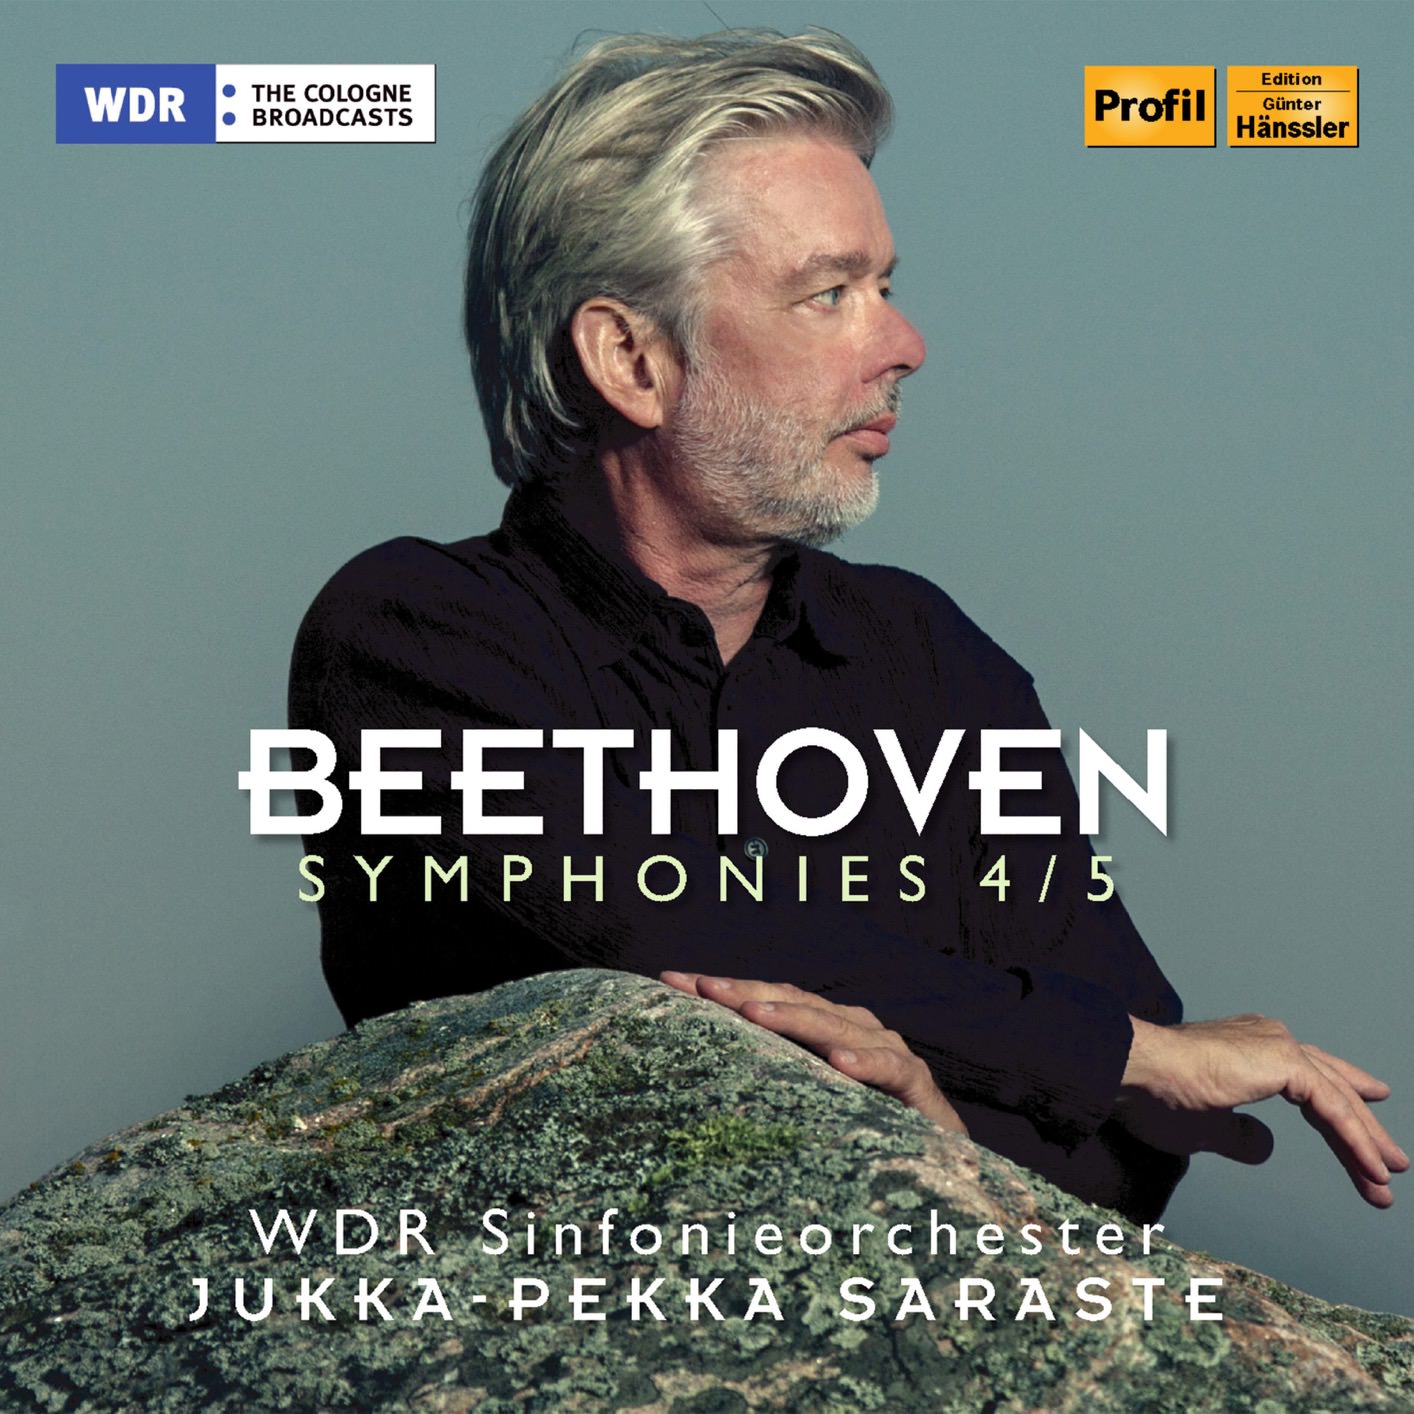 WDR Sinfonieorchester Koln & Jukka-Pekka Saraste – Beethoven: Symphonies Nos. 4 & 5 (2018) [FLAC 24bit/48kHz]